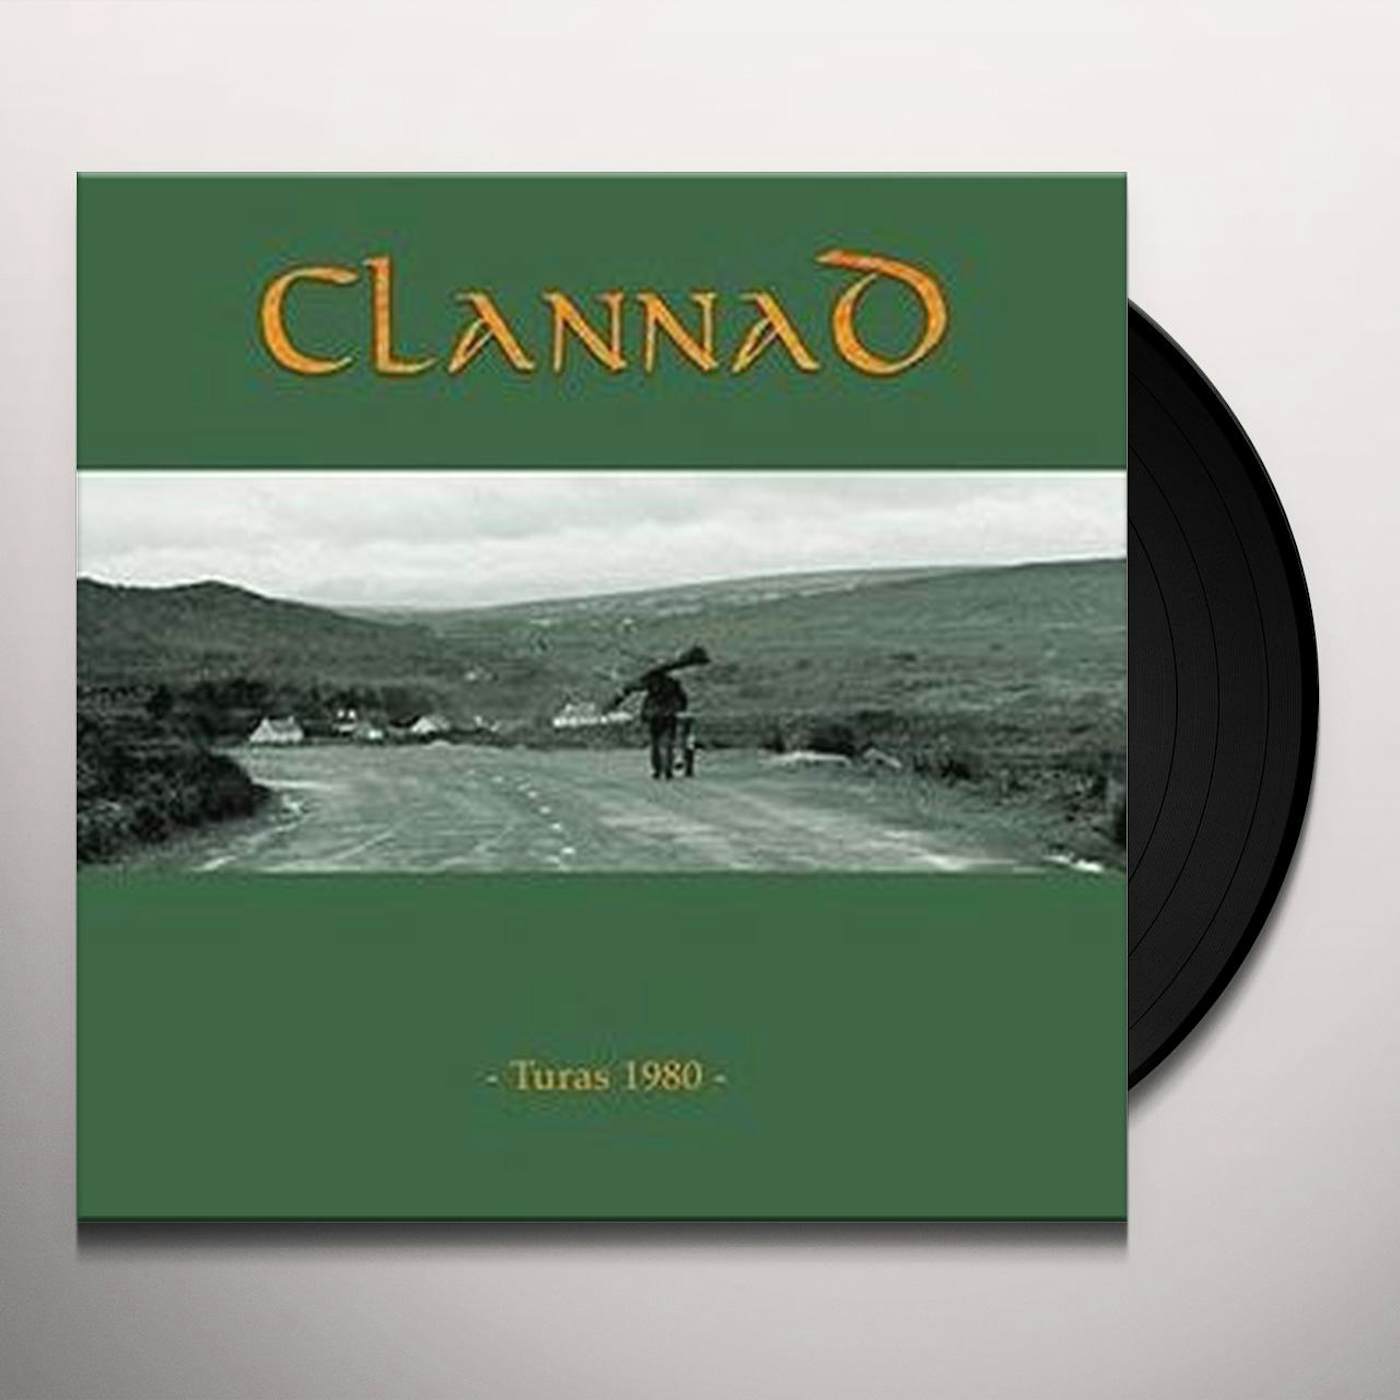 Clannad – Banba (1993, CD) - Discogs